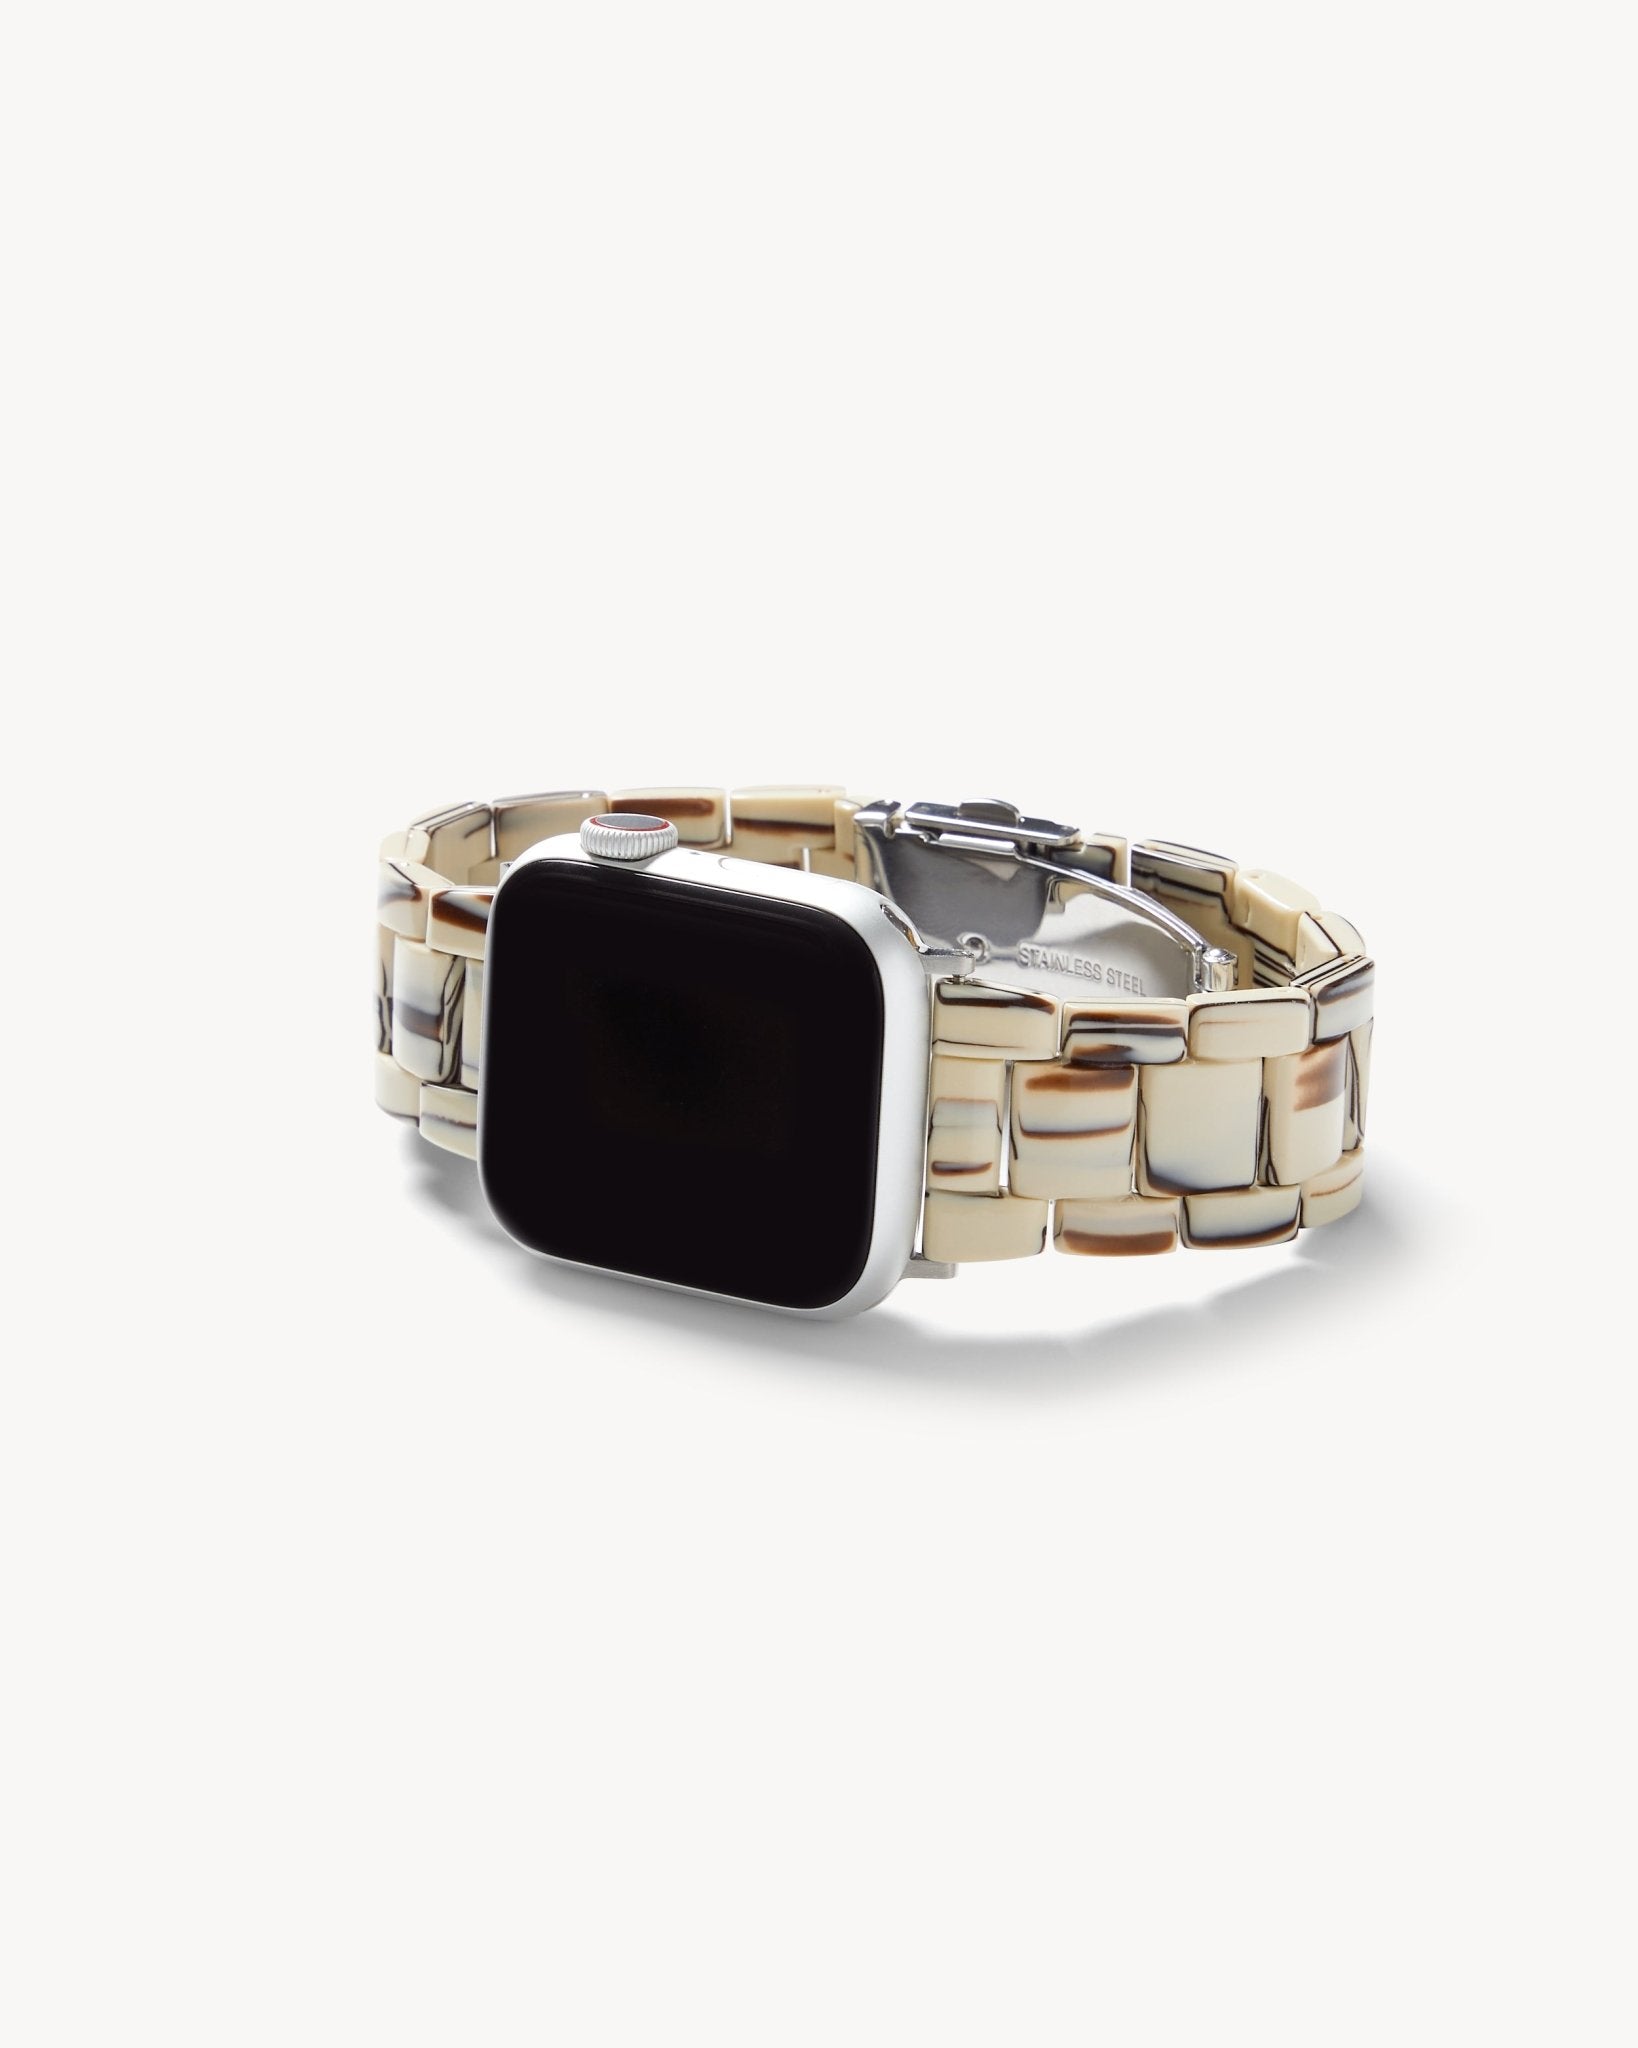 MACHETE Deluxe Apple Watch Band Set in Ganache